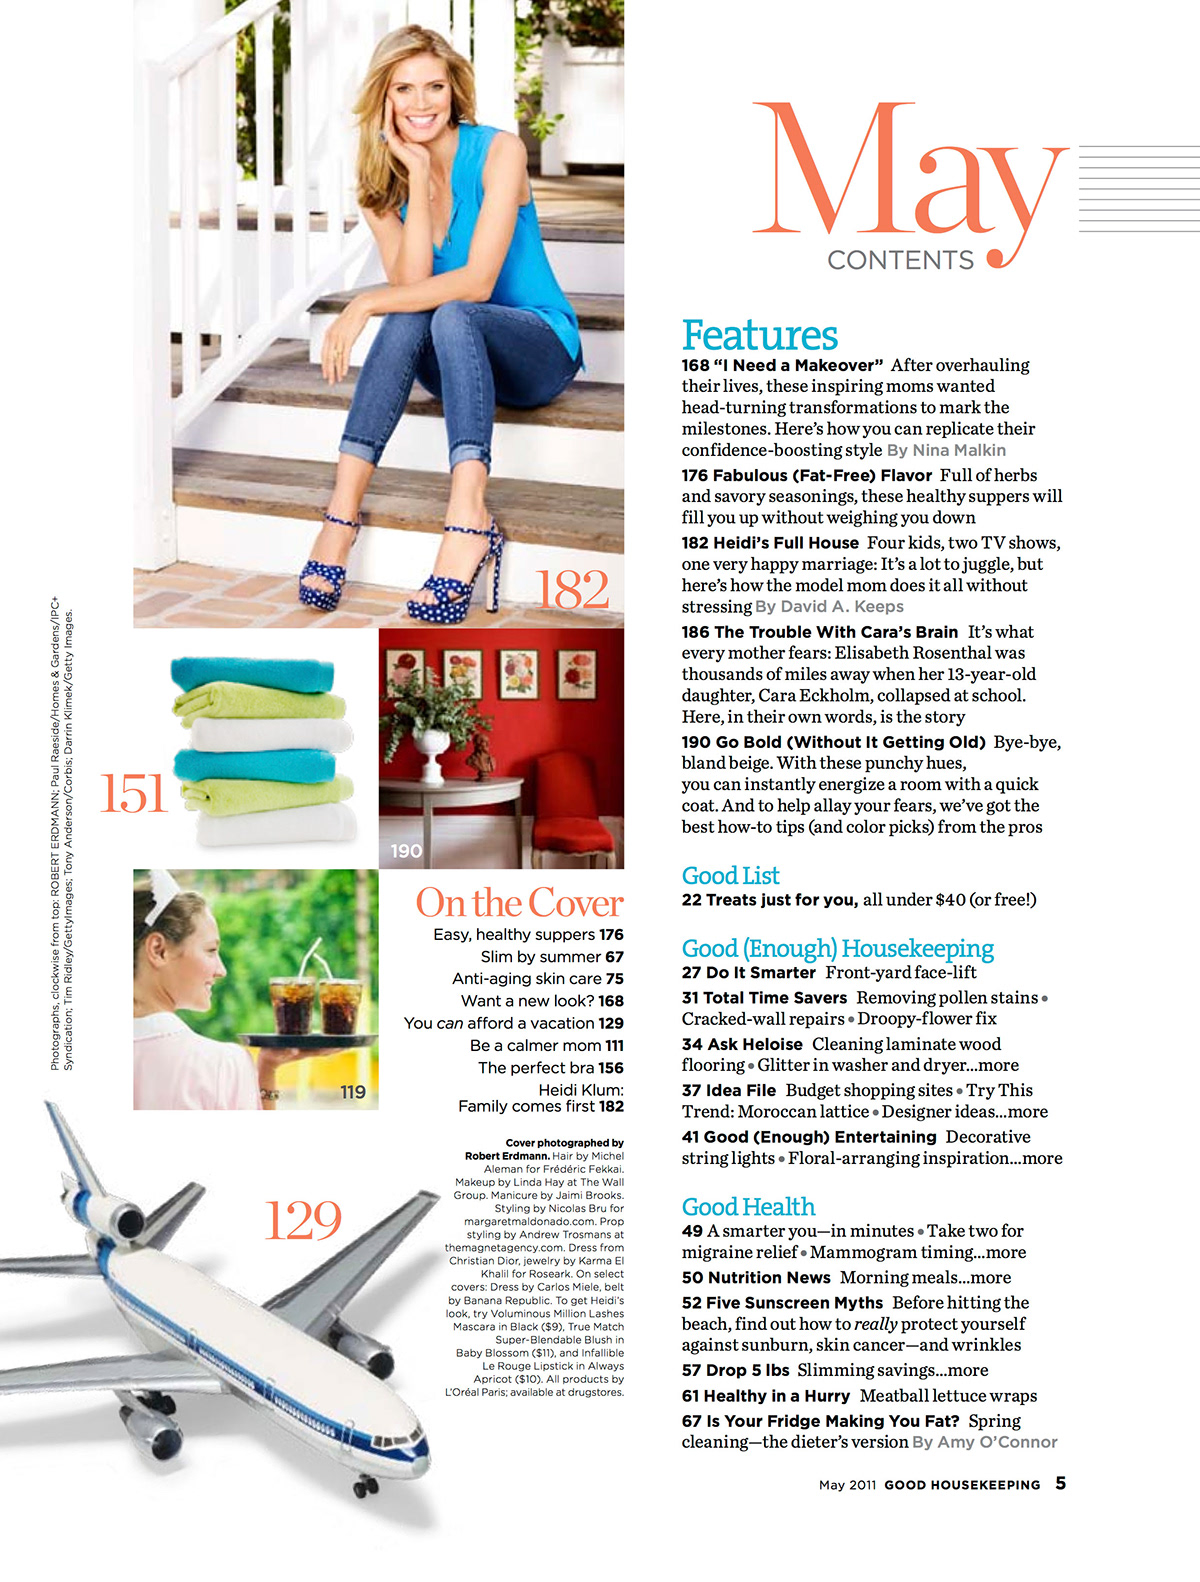 Good Housekeeping page layout Layout Design publication design magazine